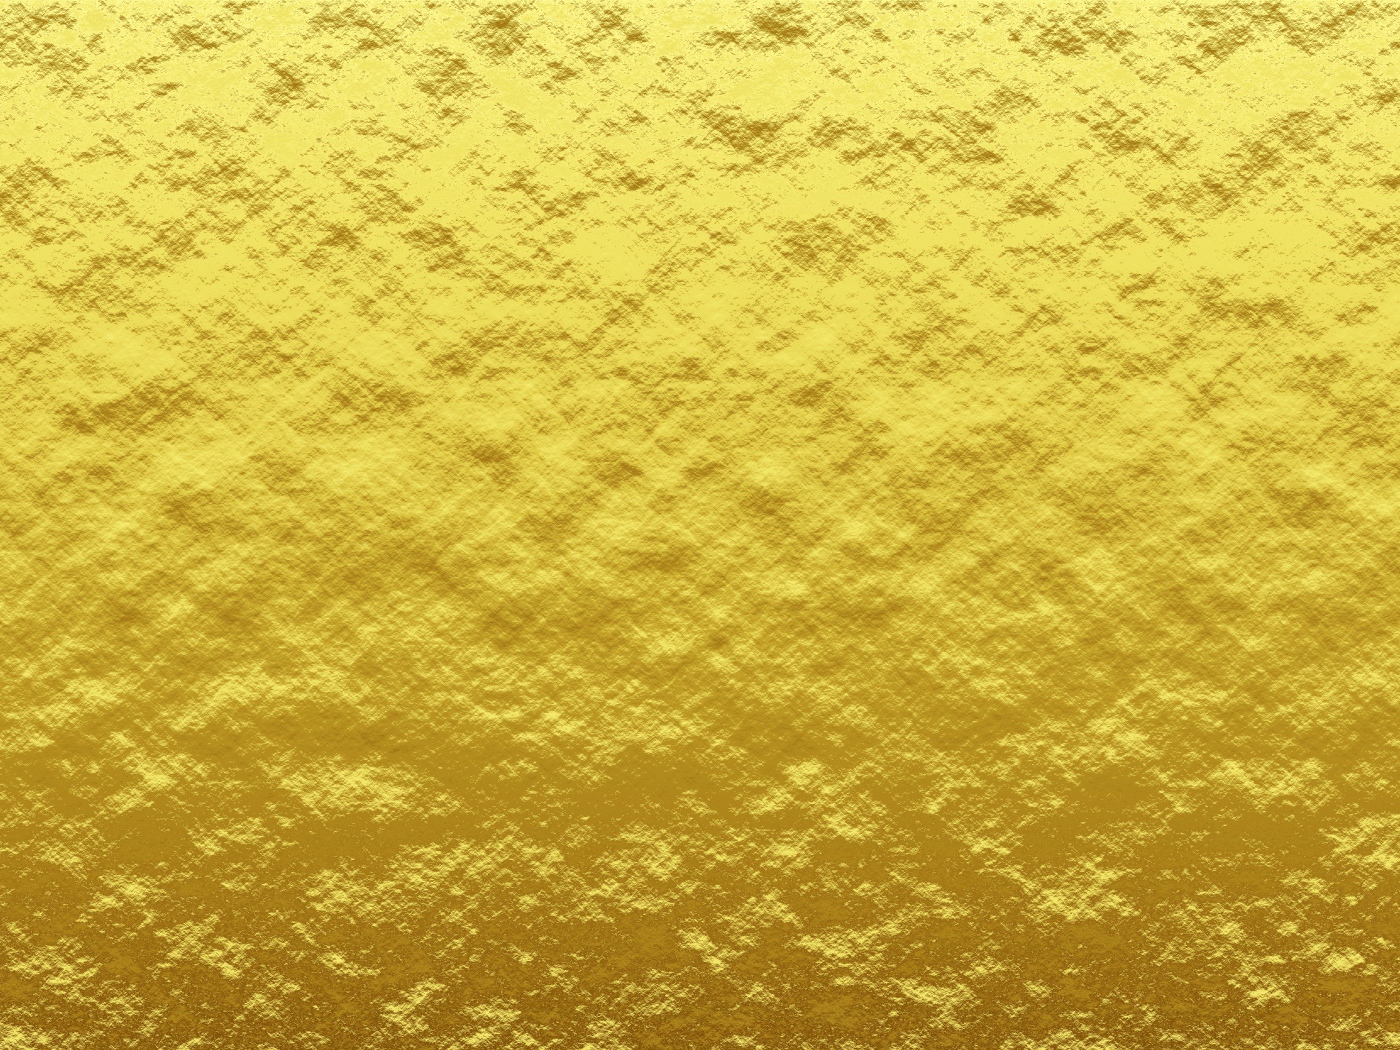 Gold uneven texture background